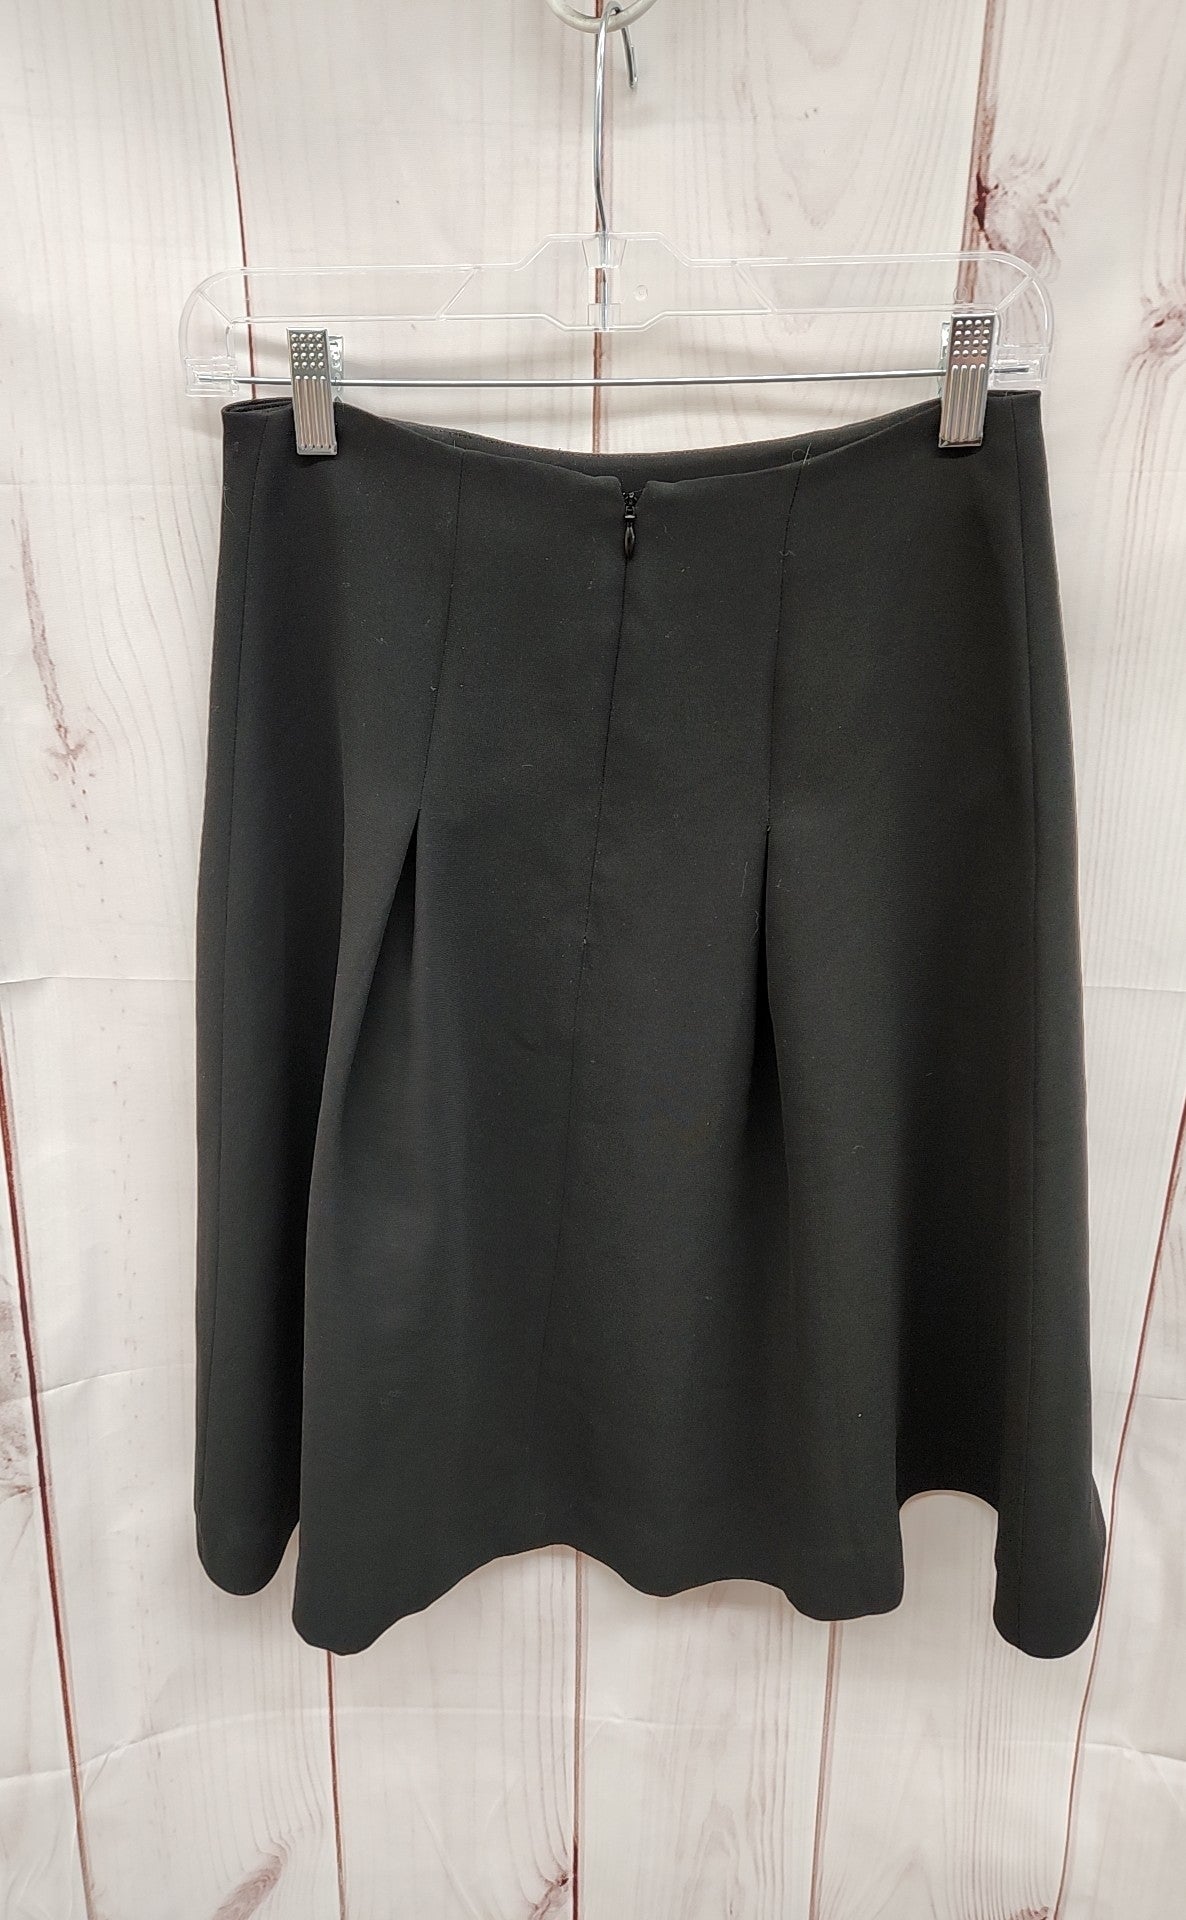 Ann Taylor Women's Size 0 Black Skirt